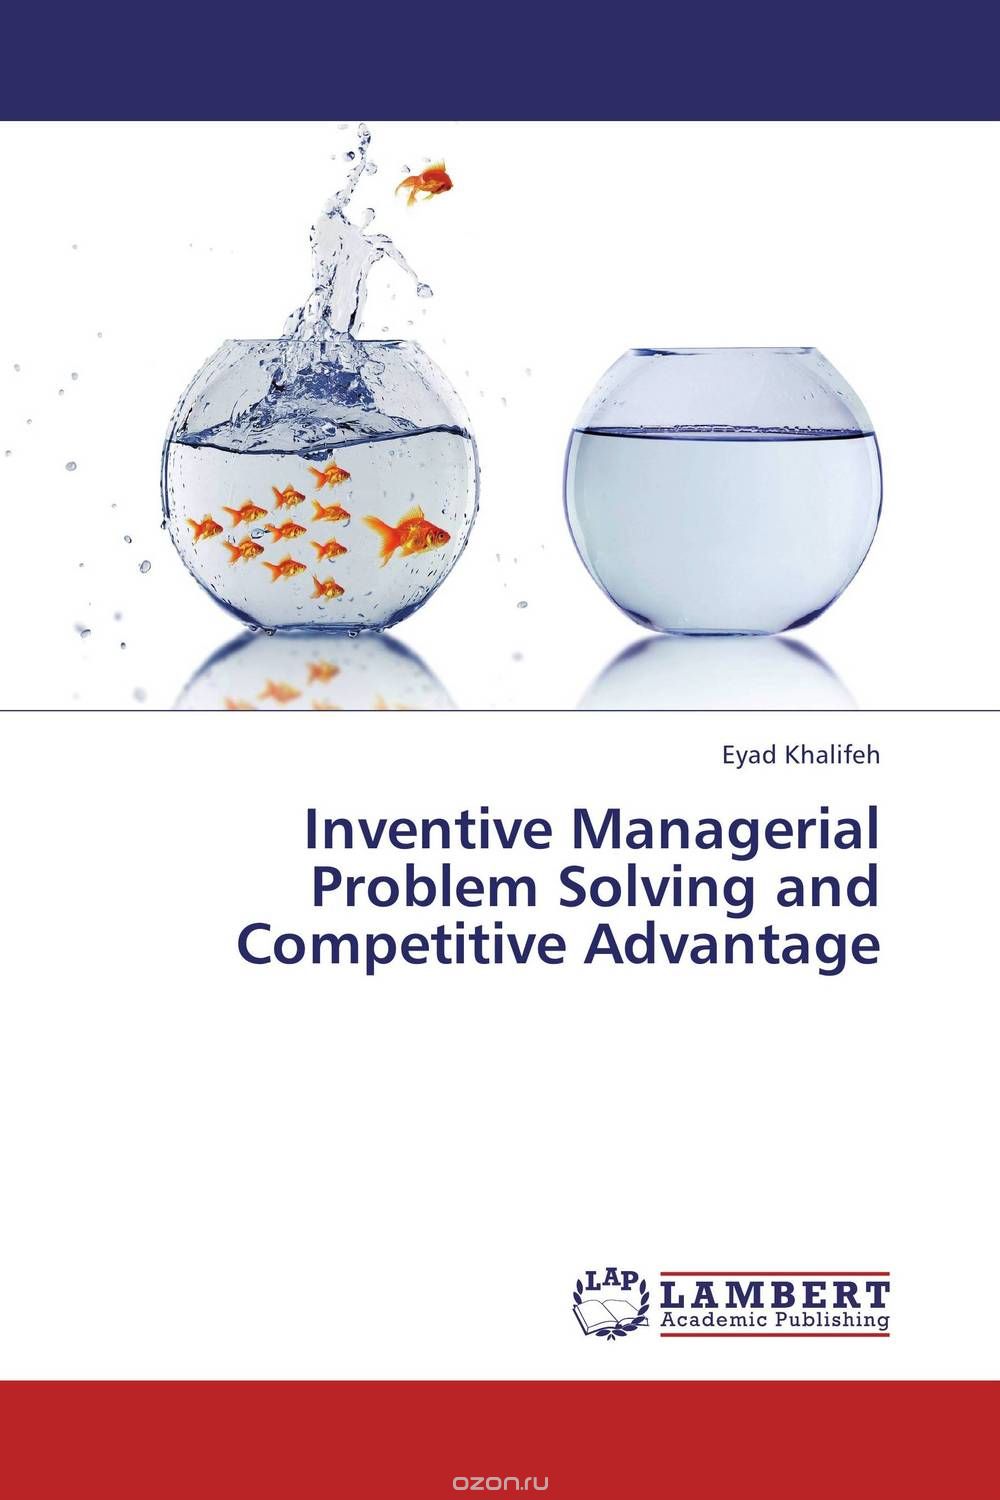 Скачать книгу "Inventive Managerial Problem Solving and Competitive Advantage"